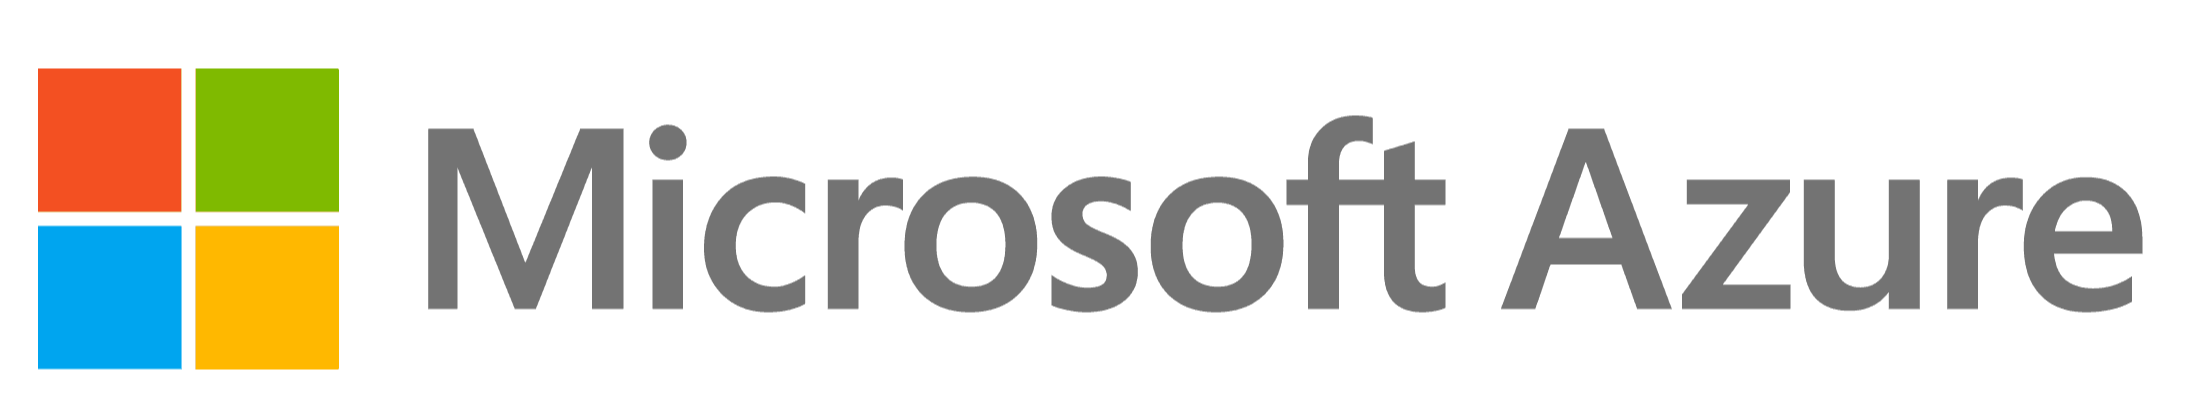 Microsoft Azure Logo dark-1